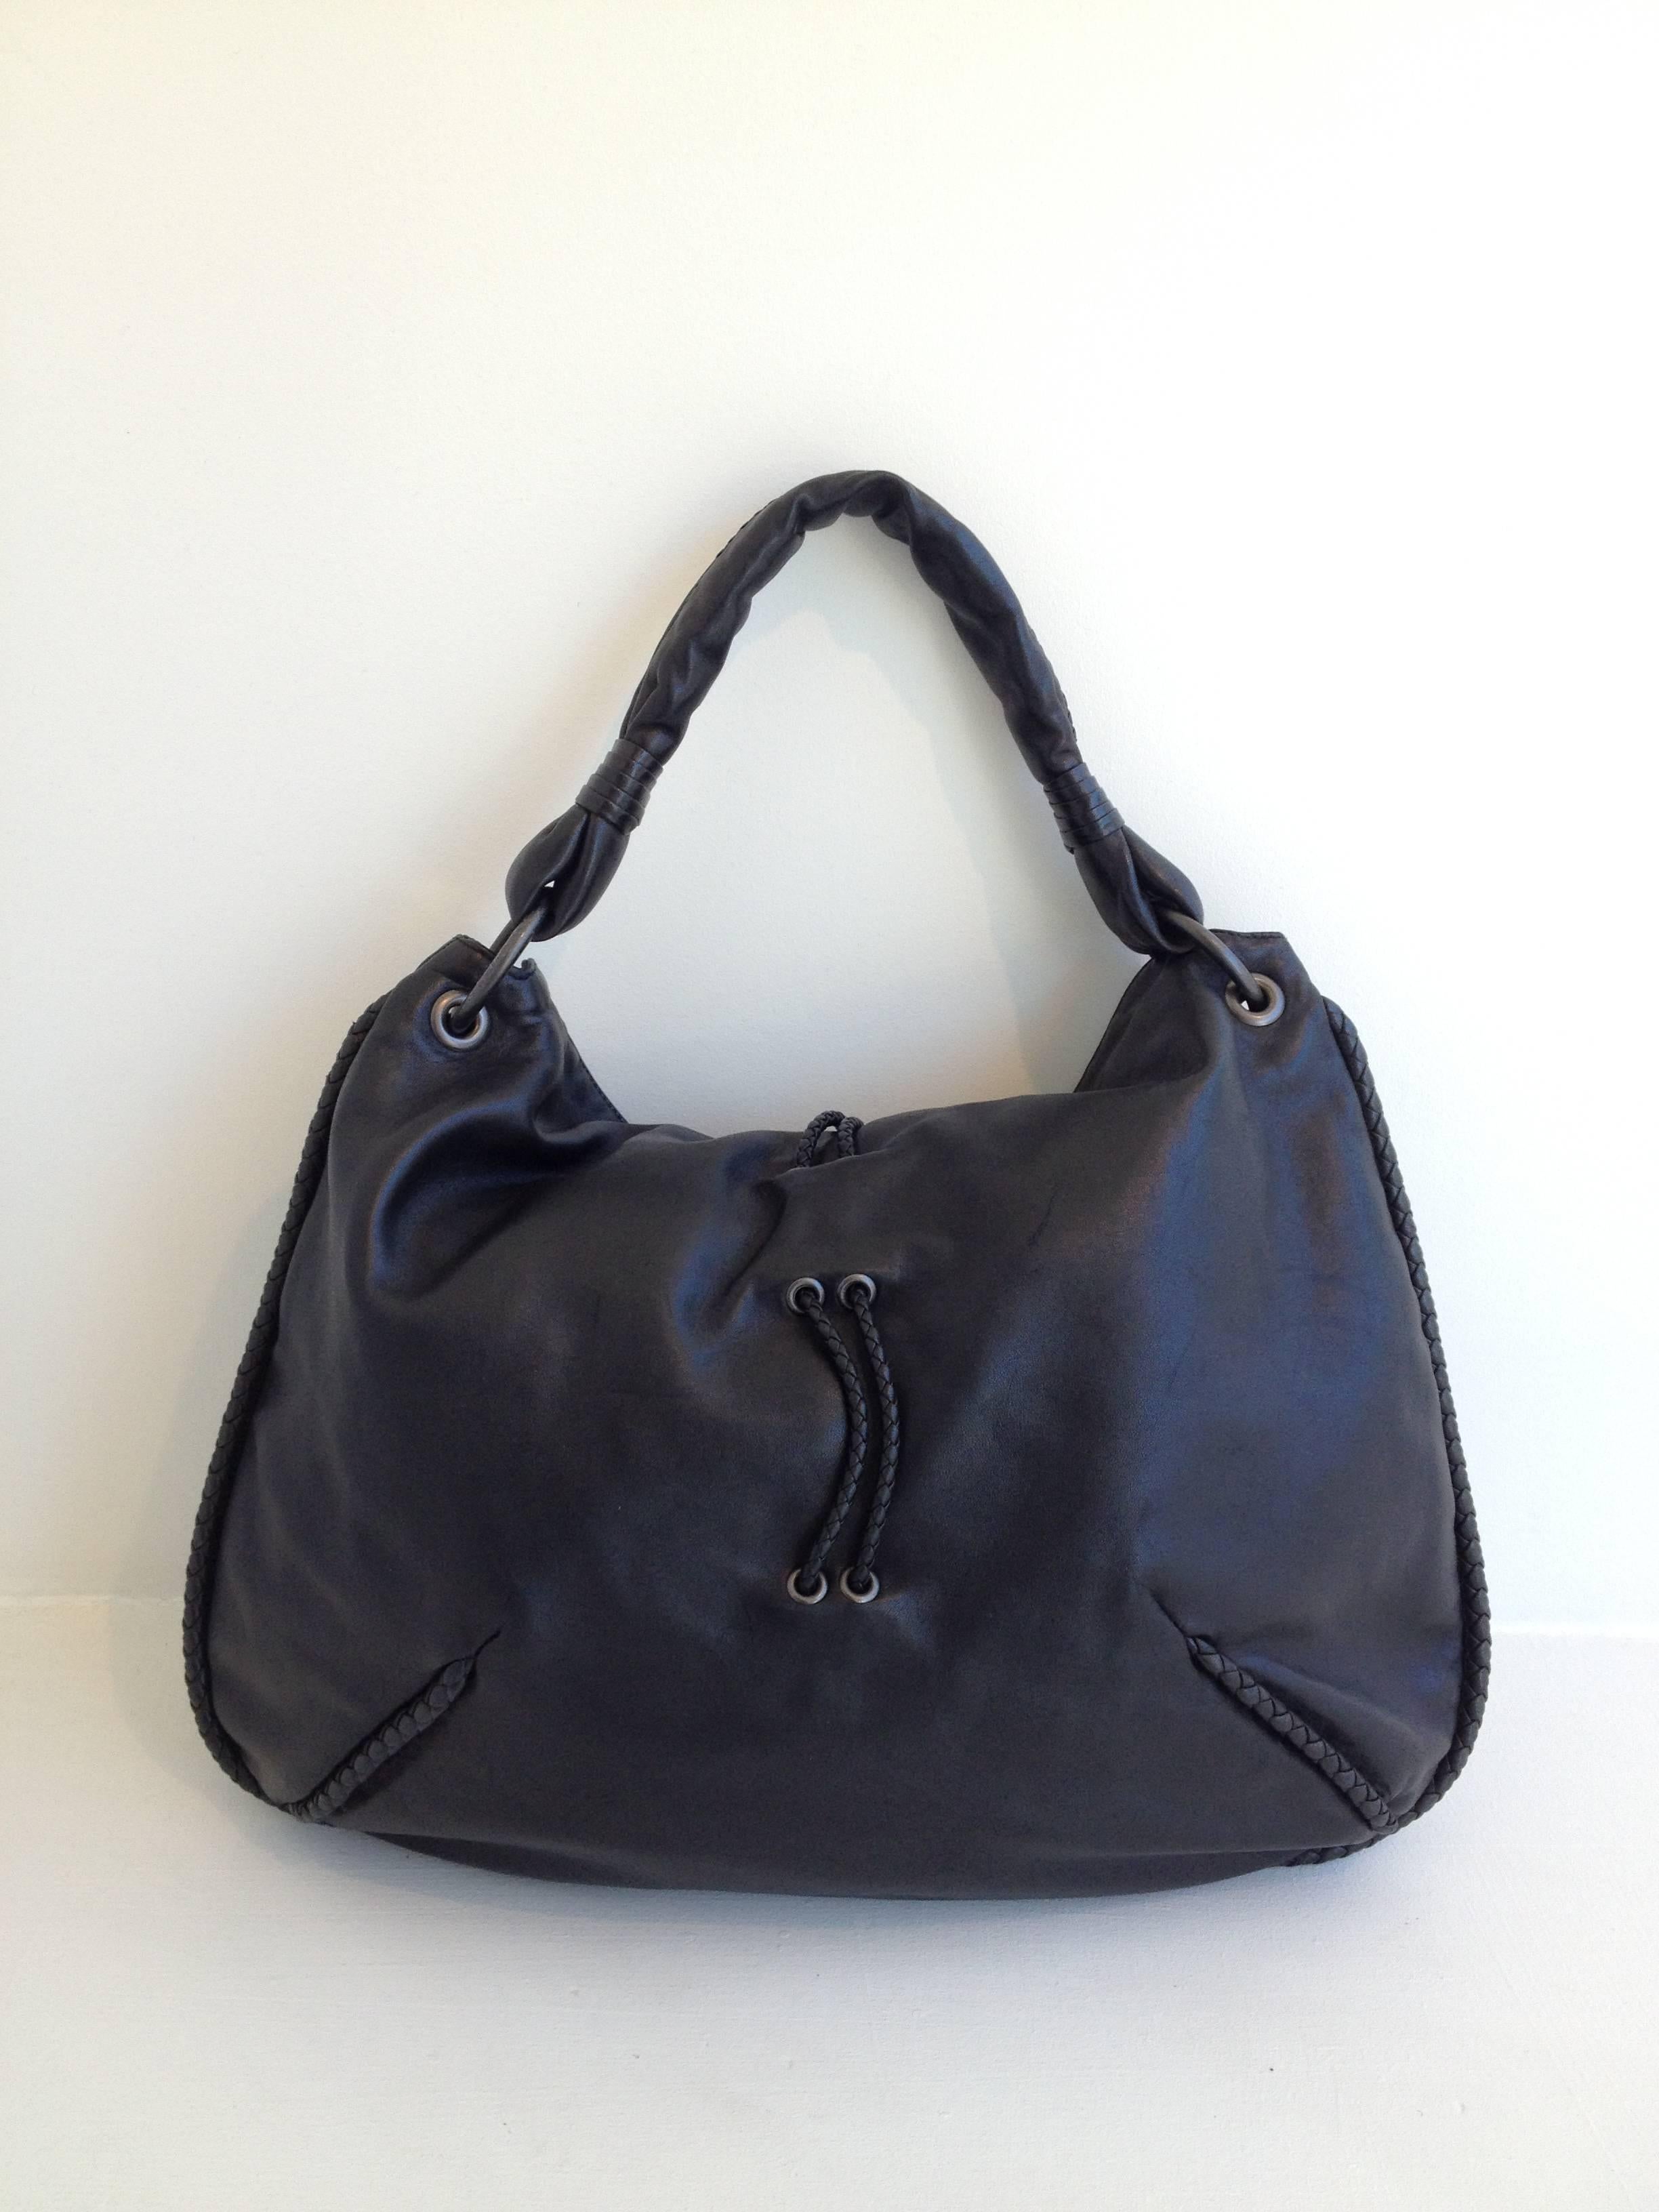 Bottega Veneta Black Leather Hobo Bag With Intracciato Details In Good Condition In San Francisco, CA